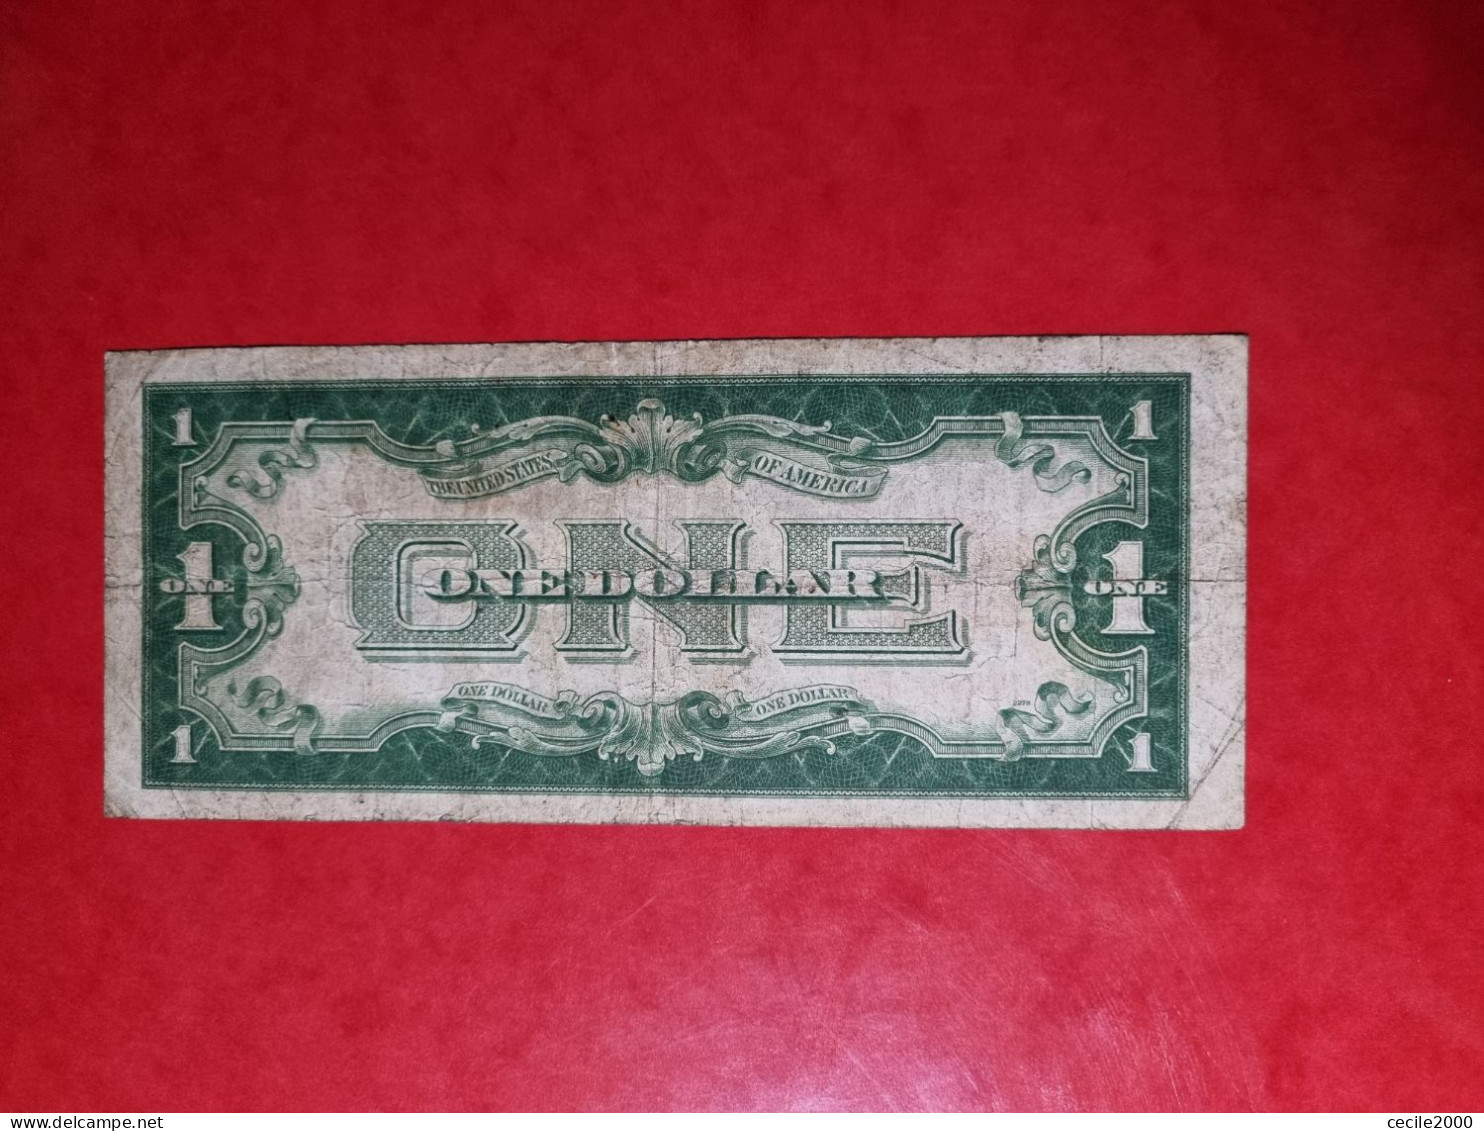 2x 1928 $1 DOLLAR USA UNITED STATES BANKNOTE RED & SEAL LOT /LOTE 2 BILLETES ESTADOS UNIDOS*COMPRAS MULTIPLES CONSULTAR* - Biljetten Van De Verenigde Staten (1928-1953)